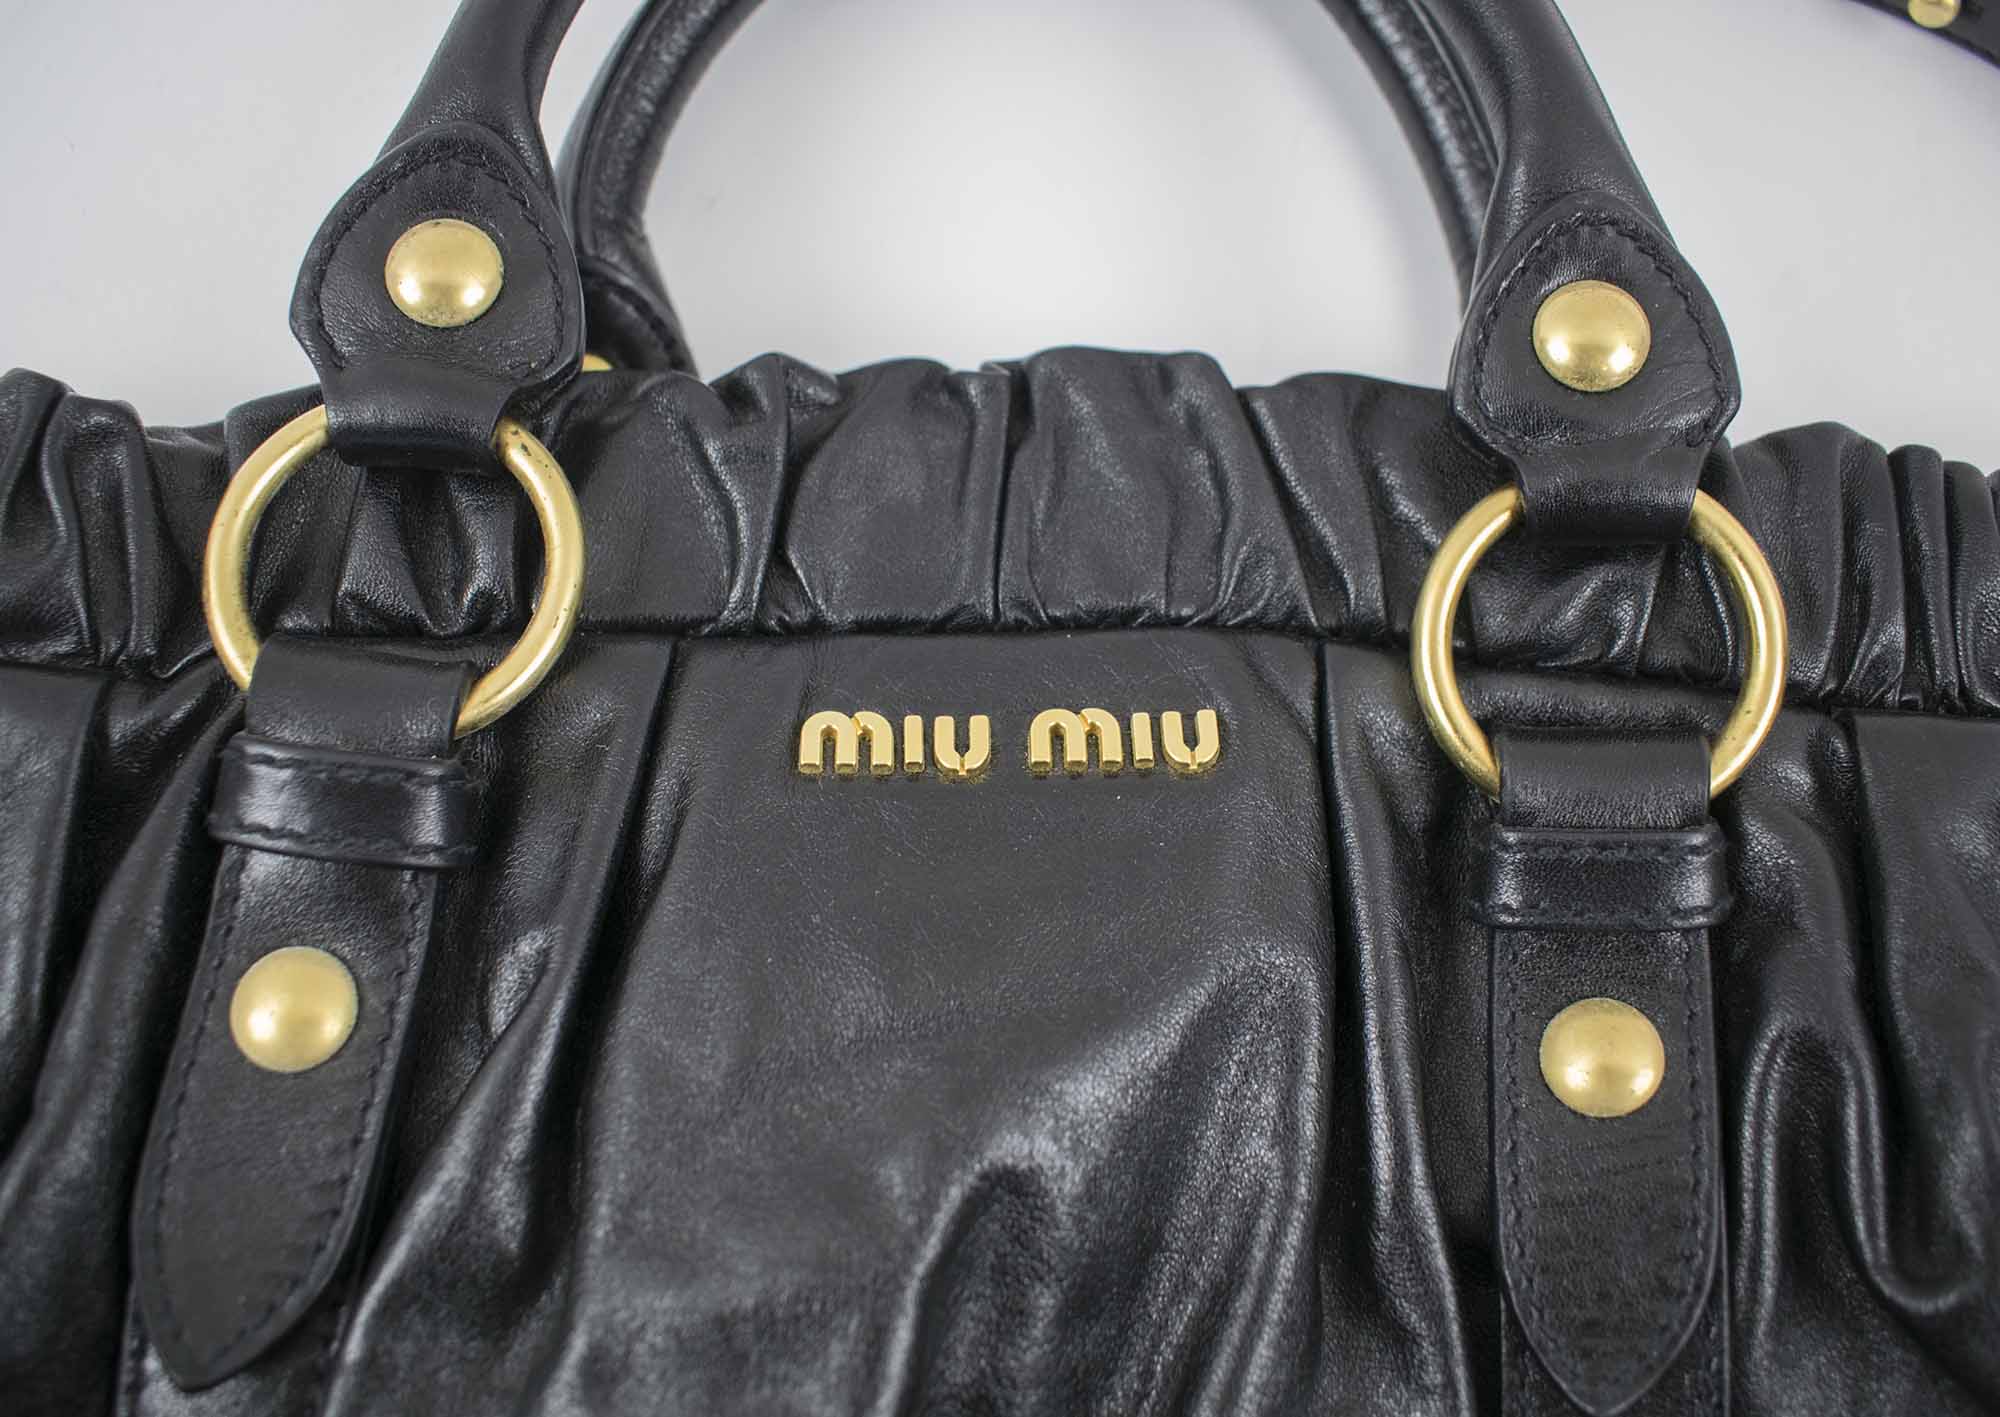 MIU MIU VITELLO LUX GATHERED TOTE BAG, black leather with detachable